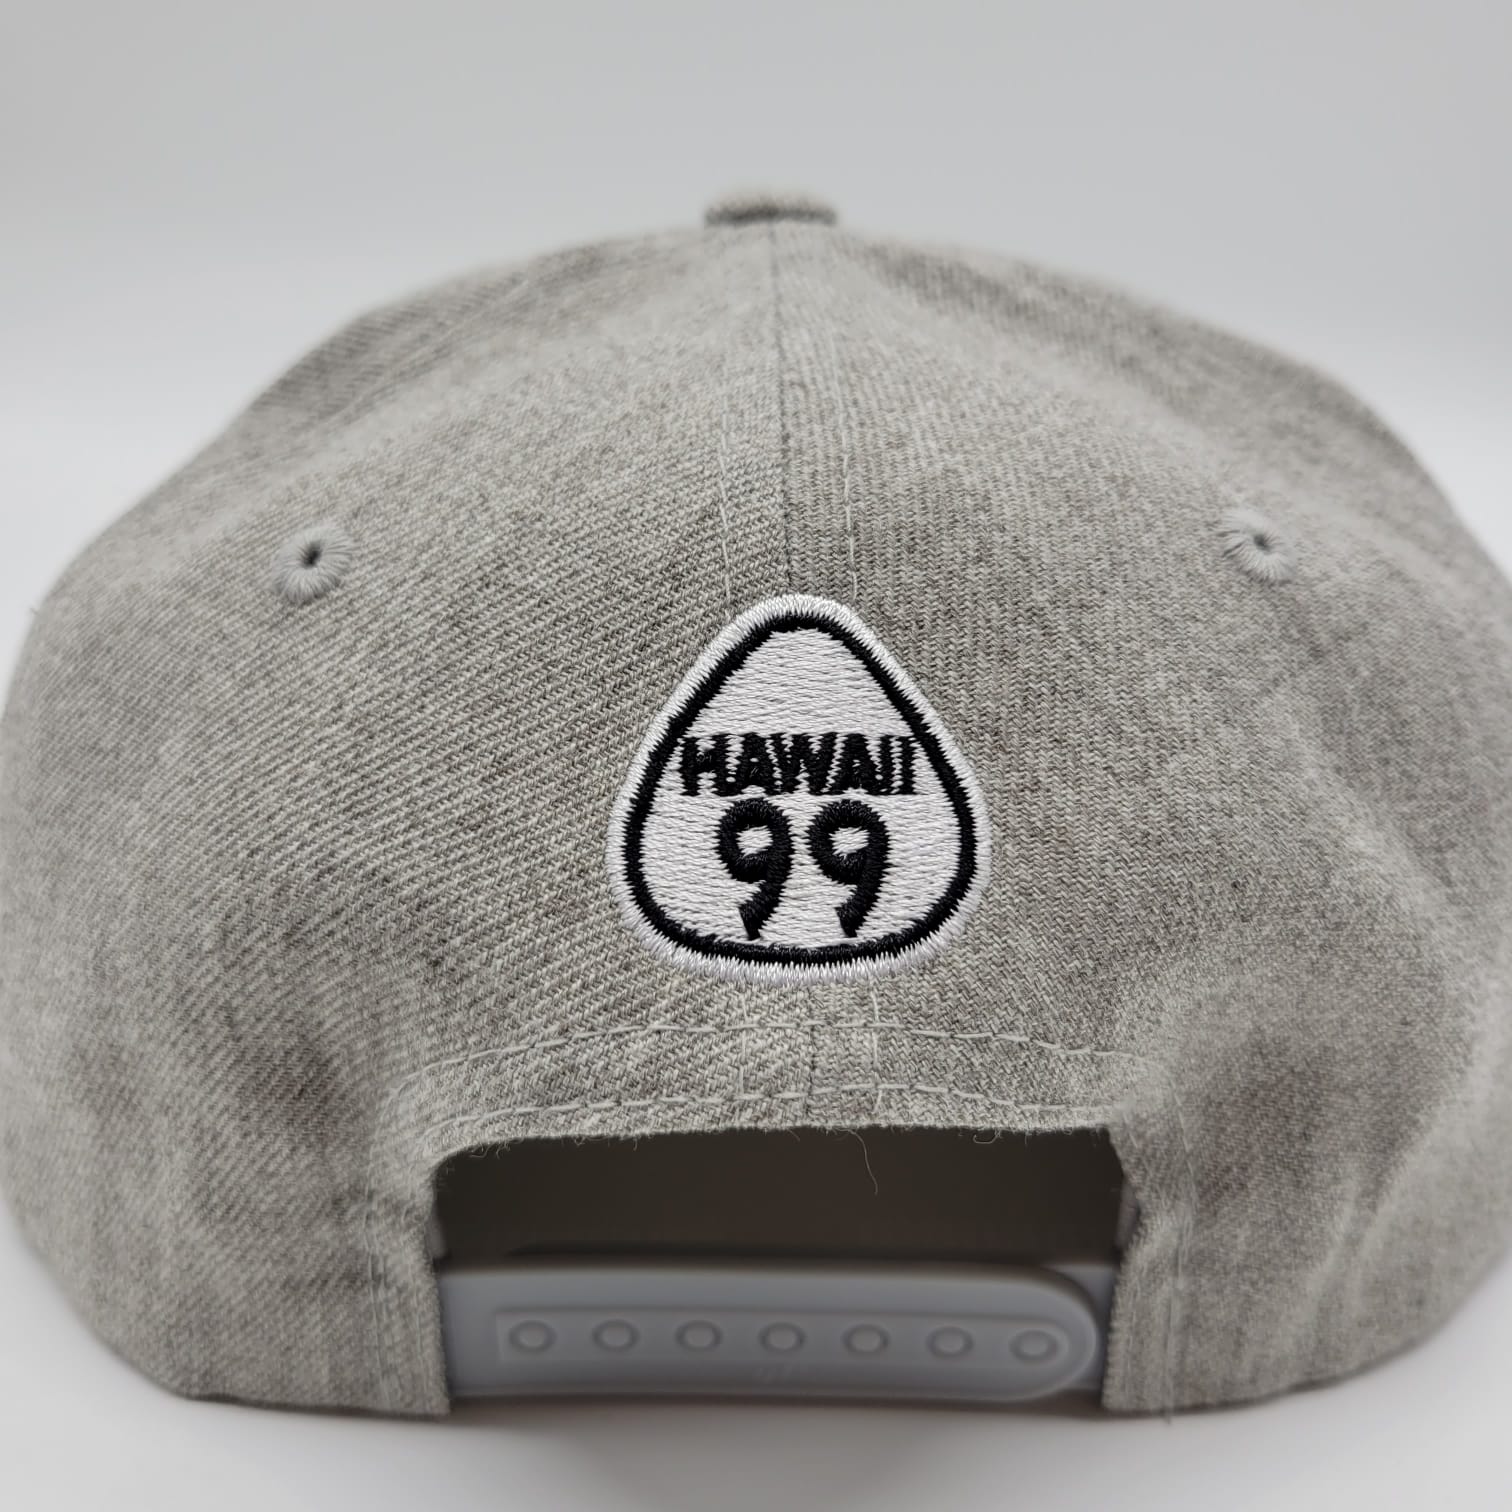 Pop-Up Mākeke - Route 99 - 3D Hawaii Islands Snapback Hat in Grey - Back View